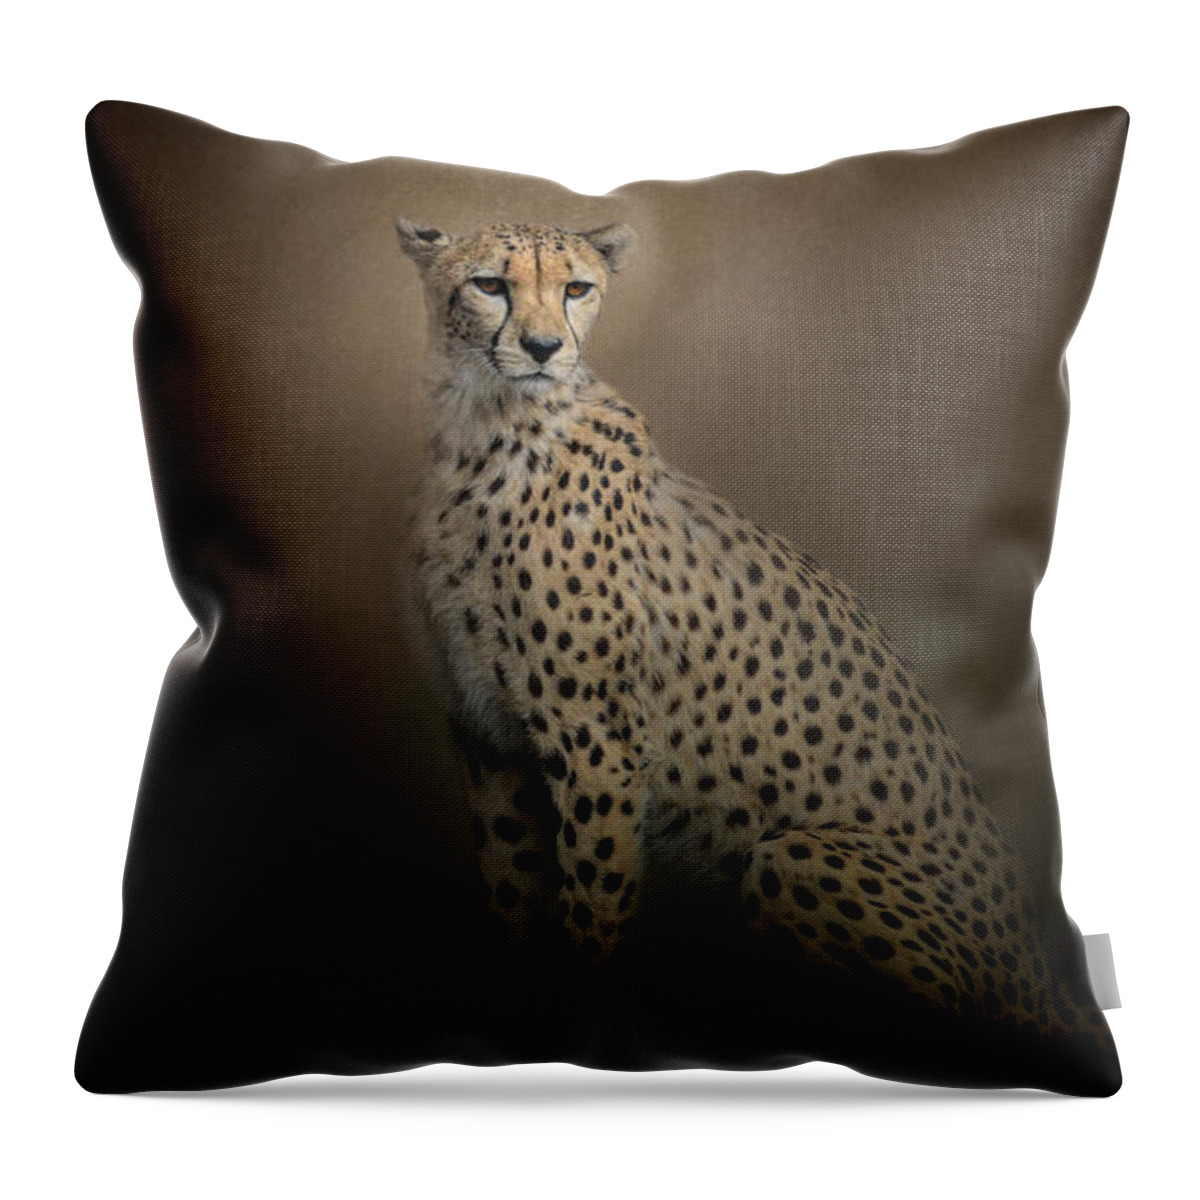 Jai Johnson Throw Pillow featuring the photograph The Elegant Cheetah by Jai Johnson